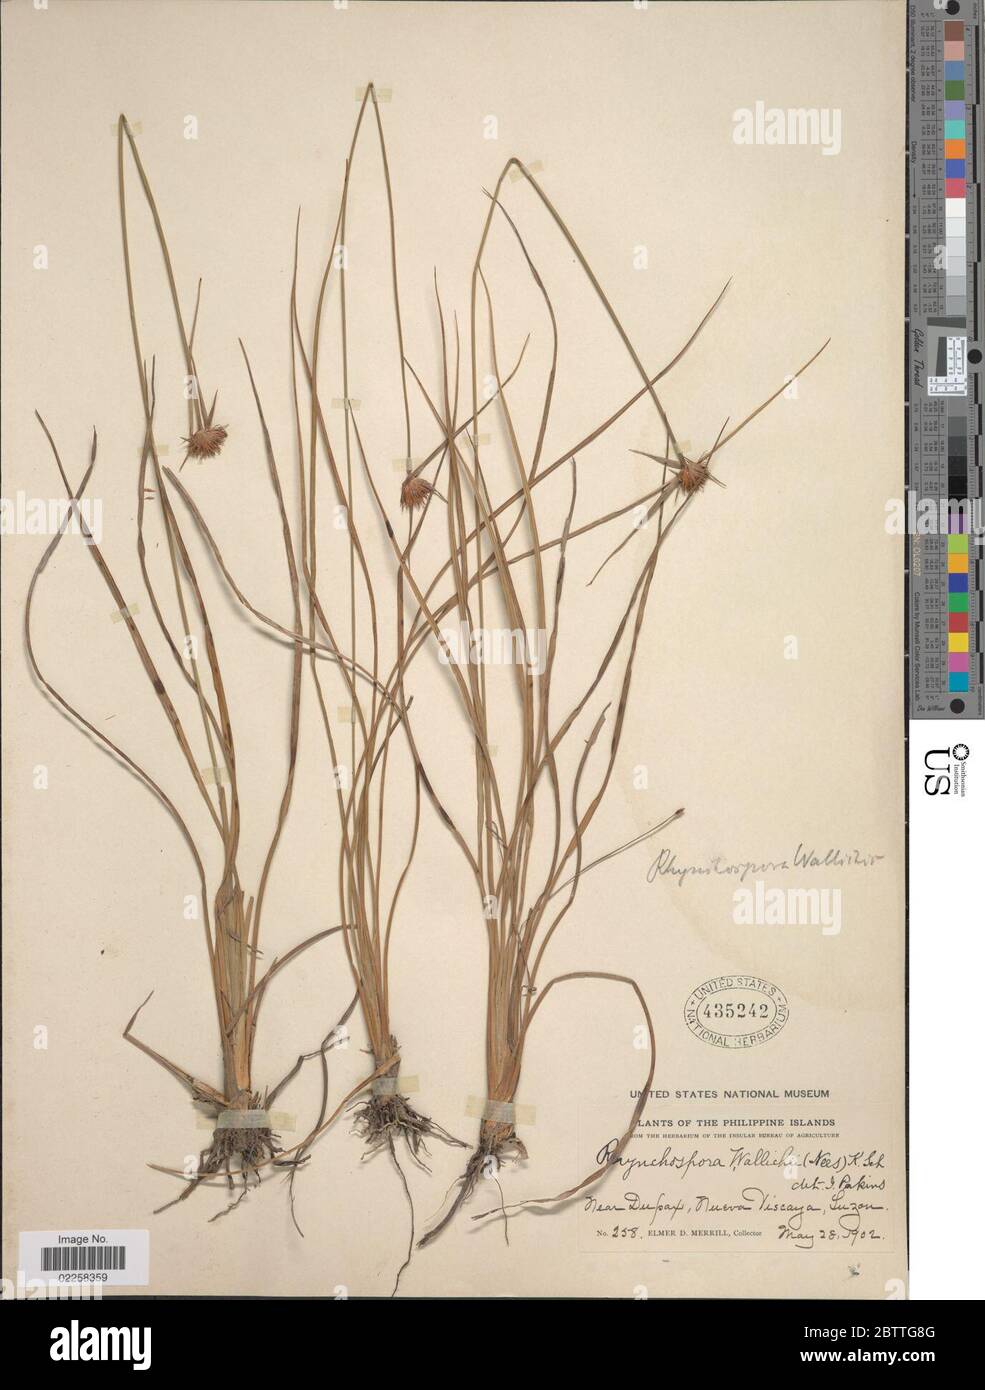 Rhynchospora rubra Lour Makino. Stock Photo